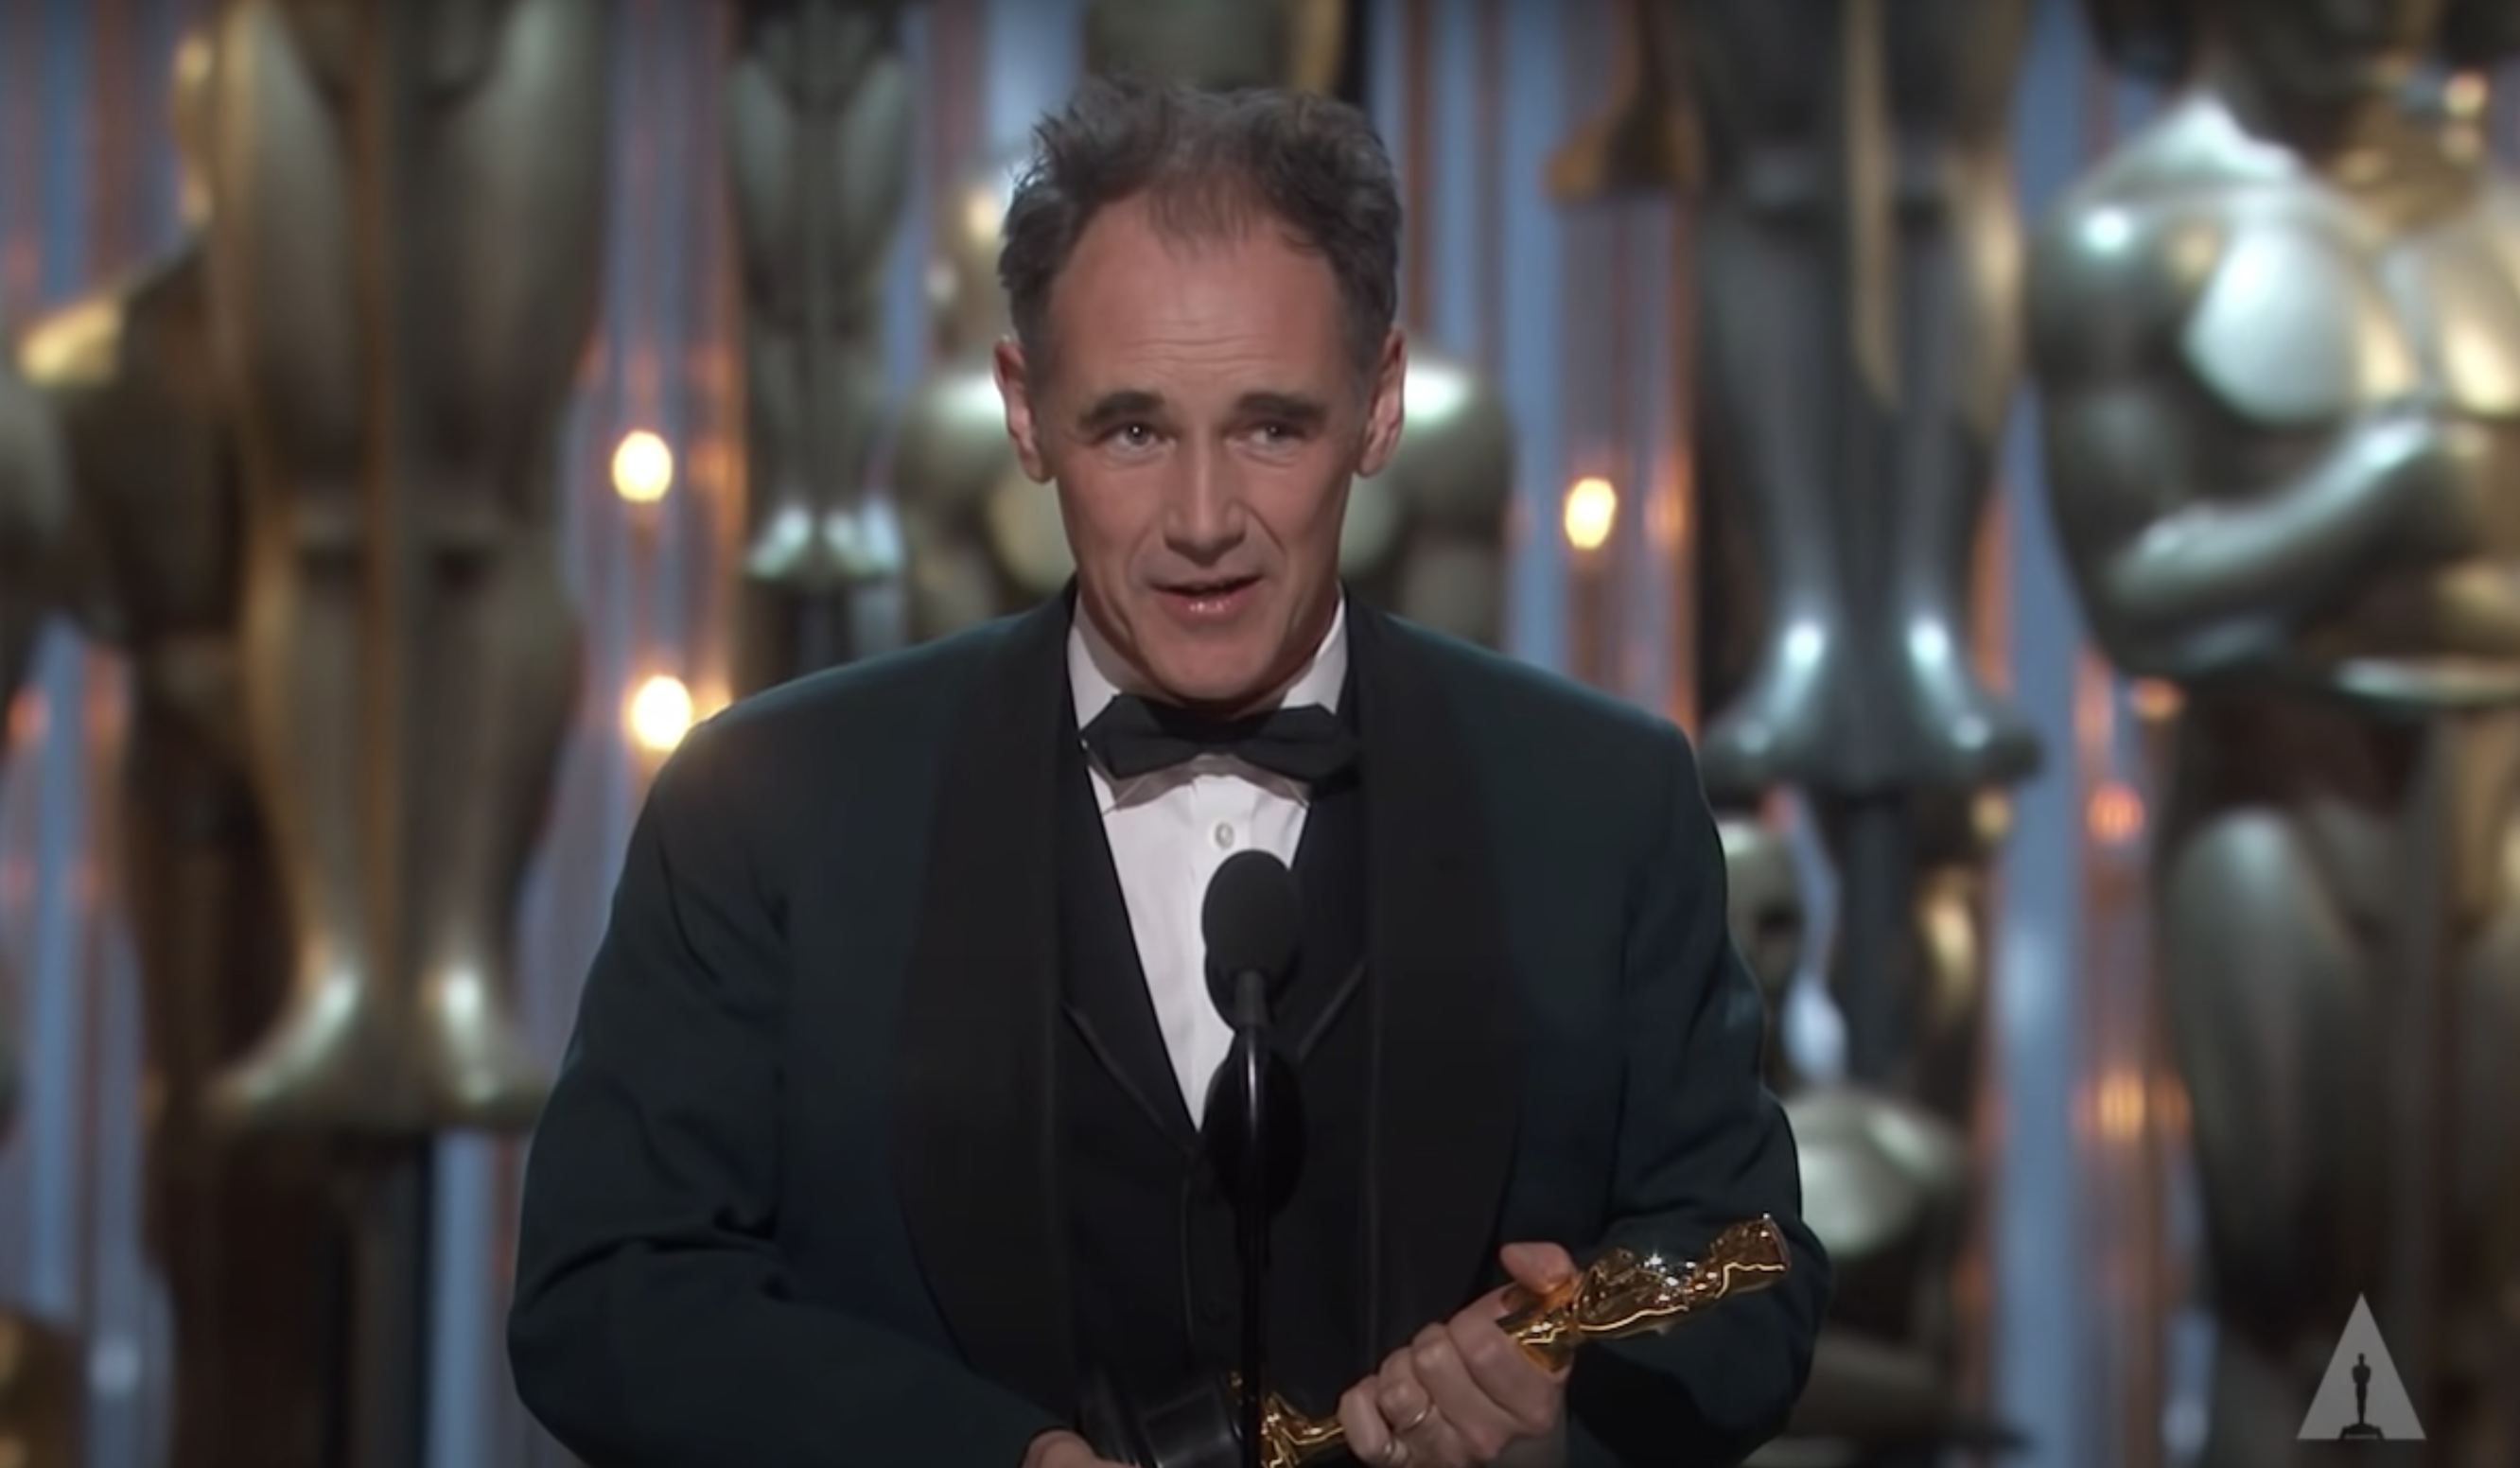 Mark accepting his Oscar